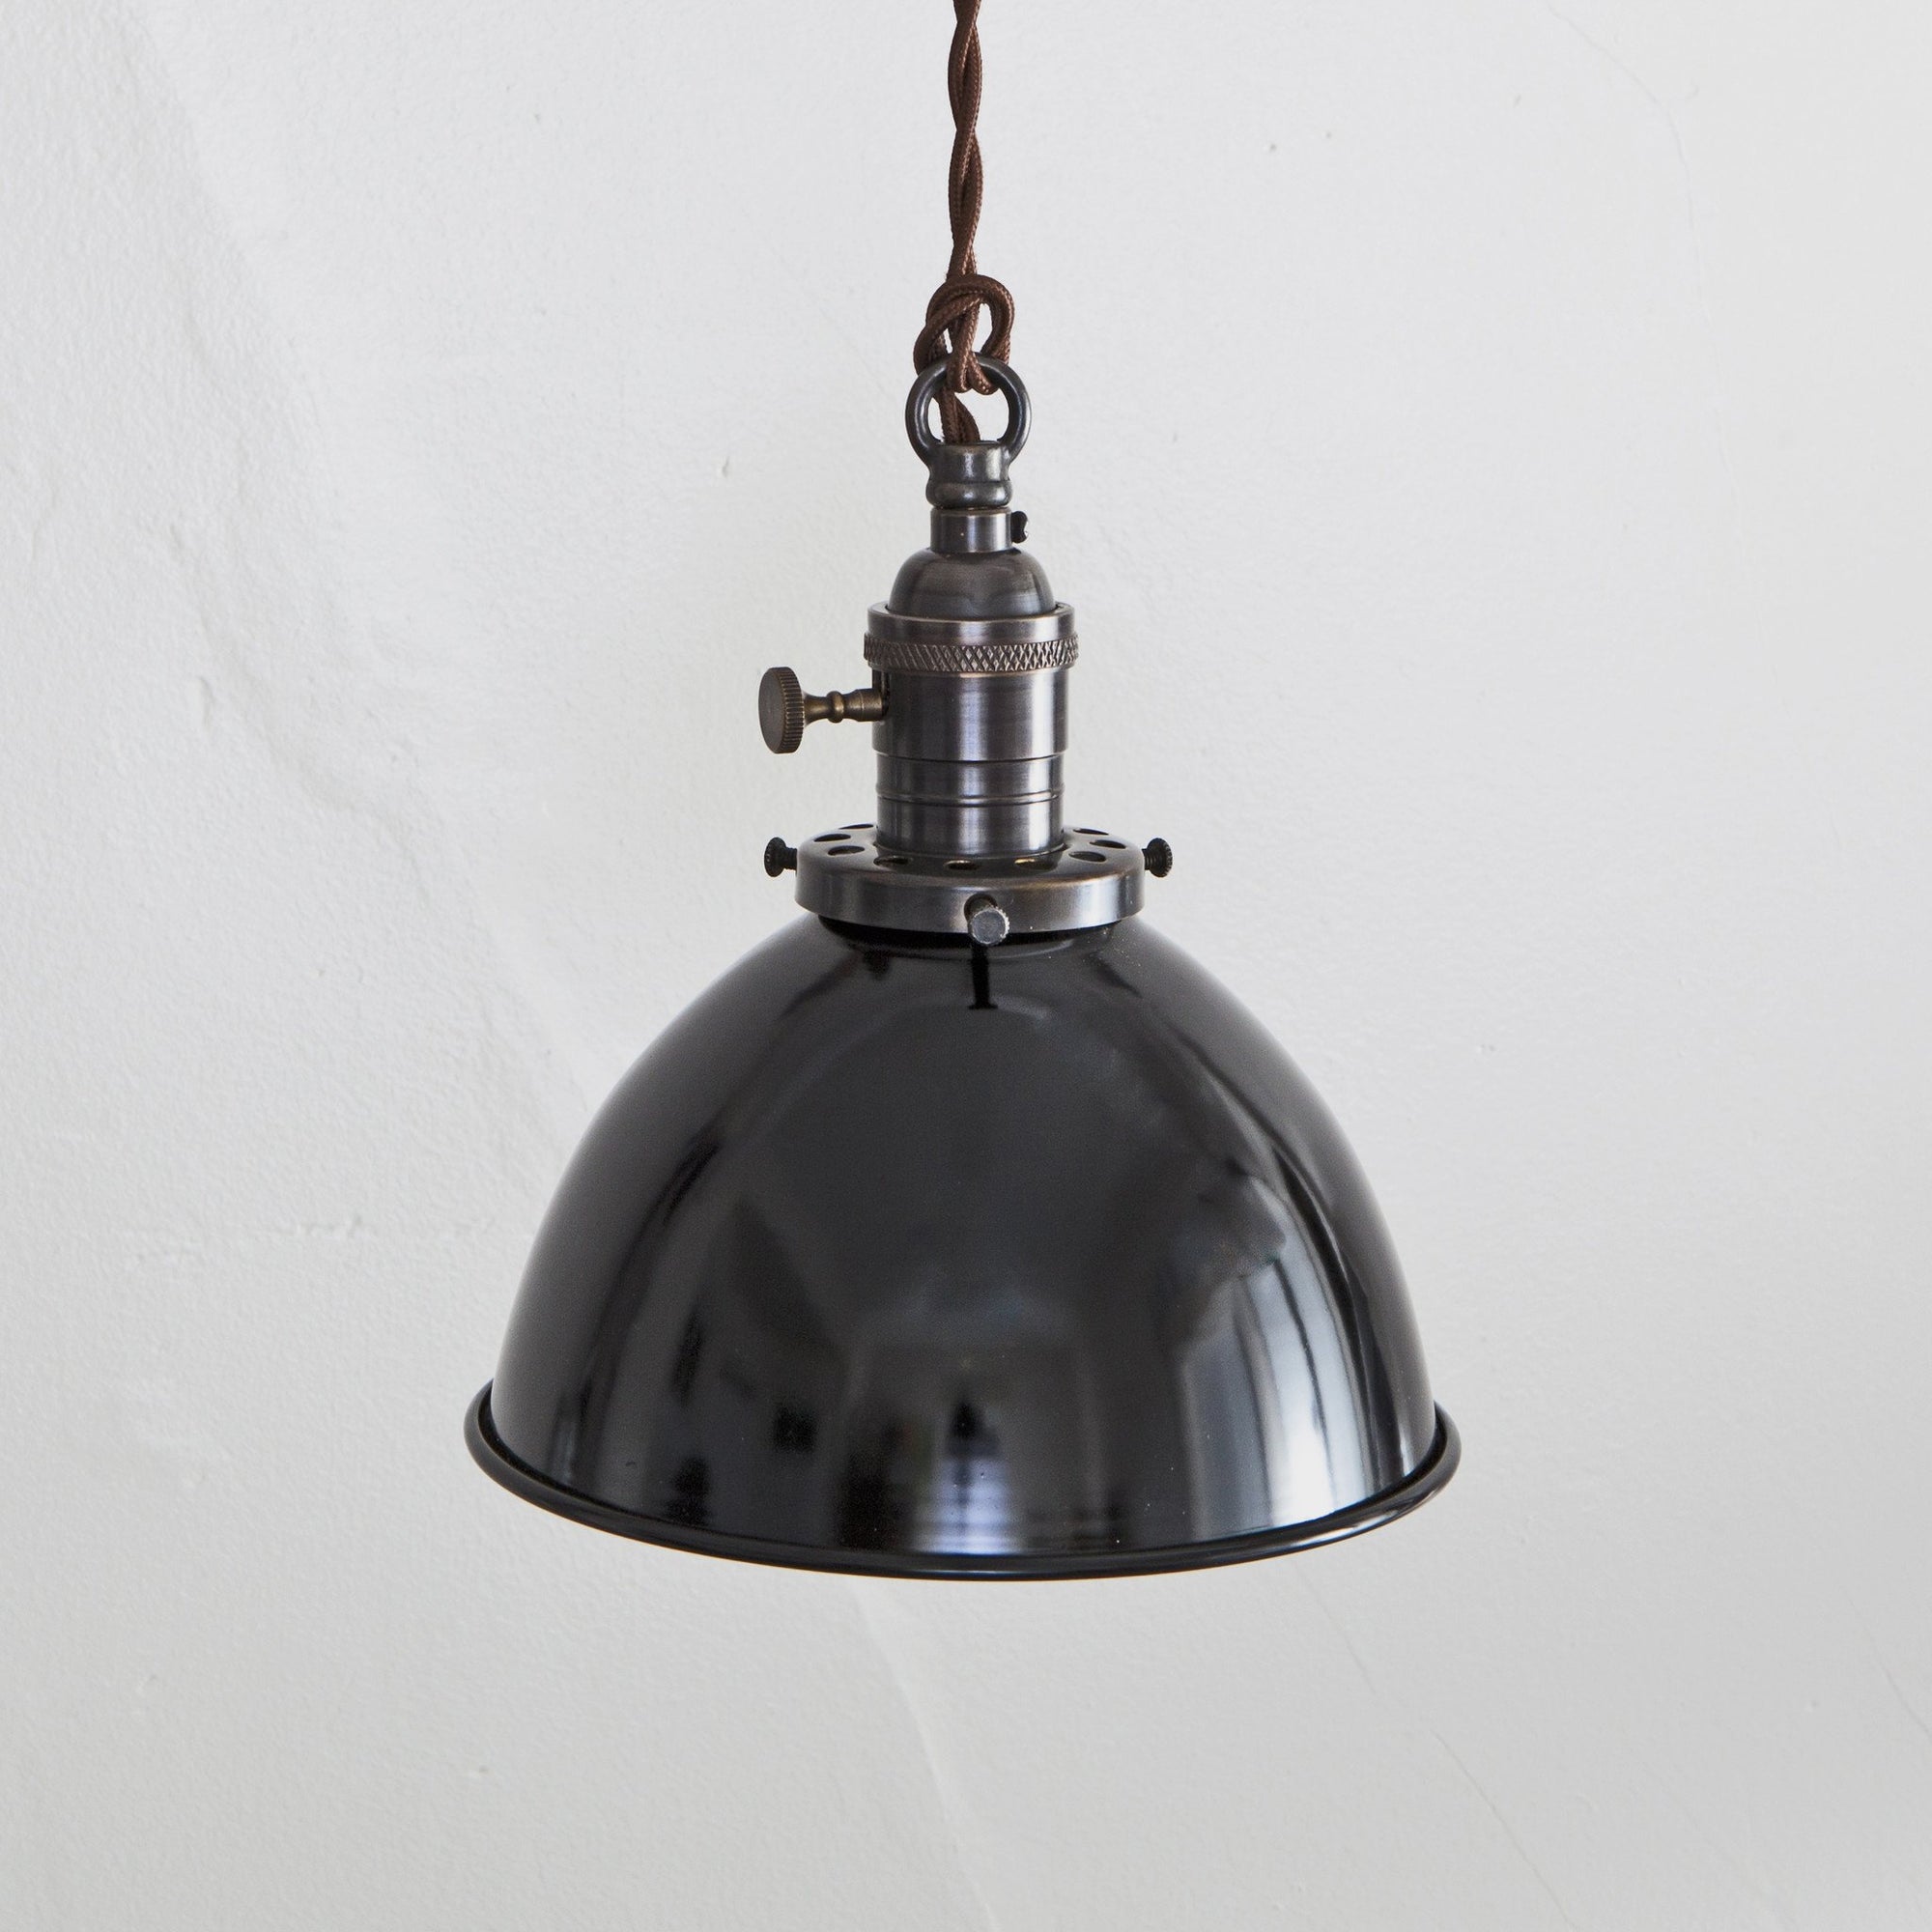 Black Porcelain Dome Shade Pendant Light - Brass Switch Socket